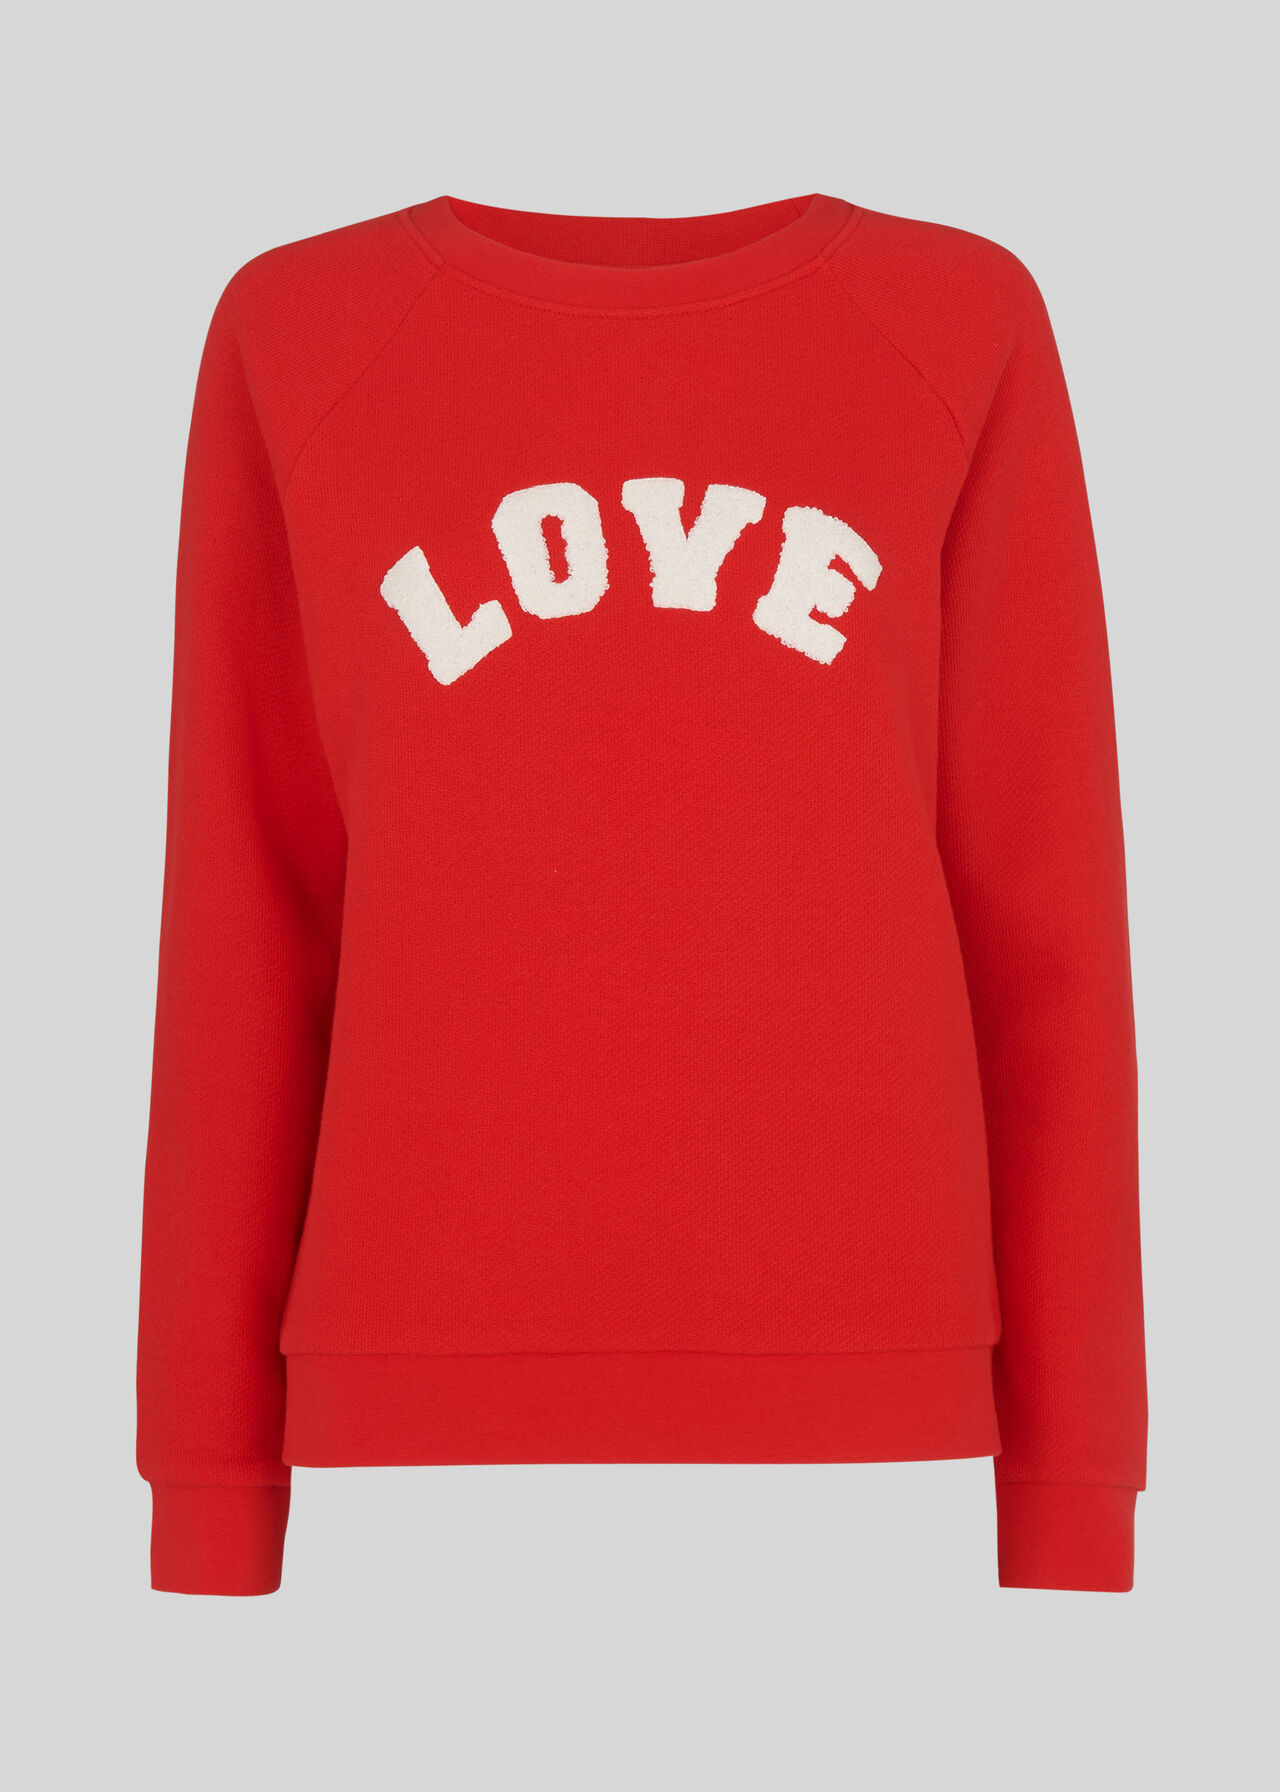 Love Sweatshirt Red